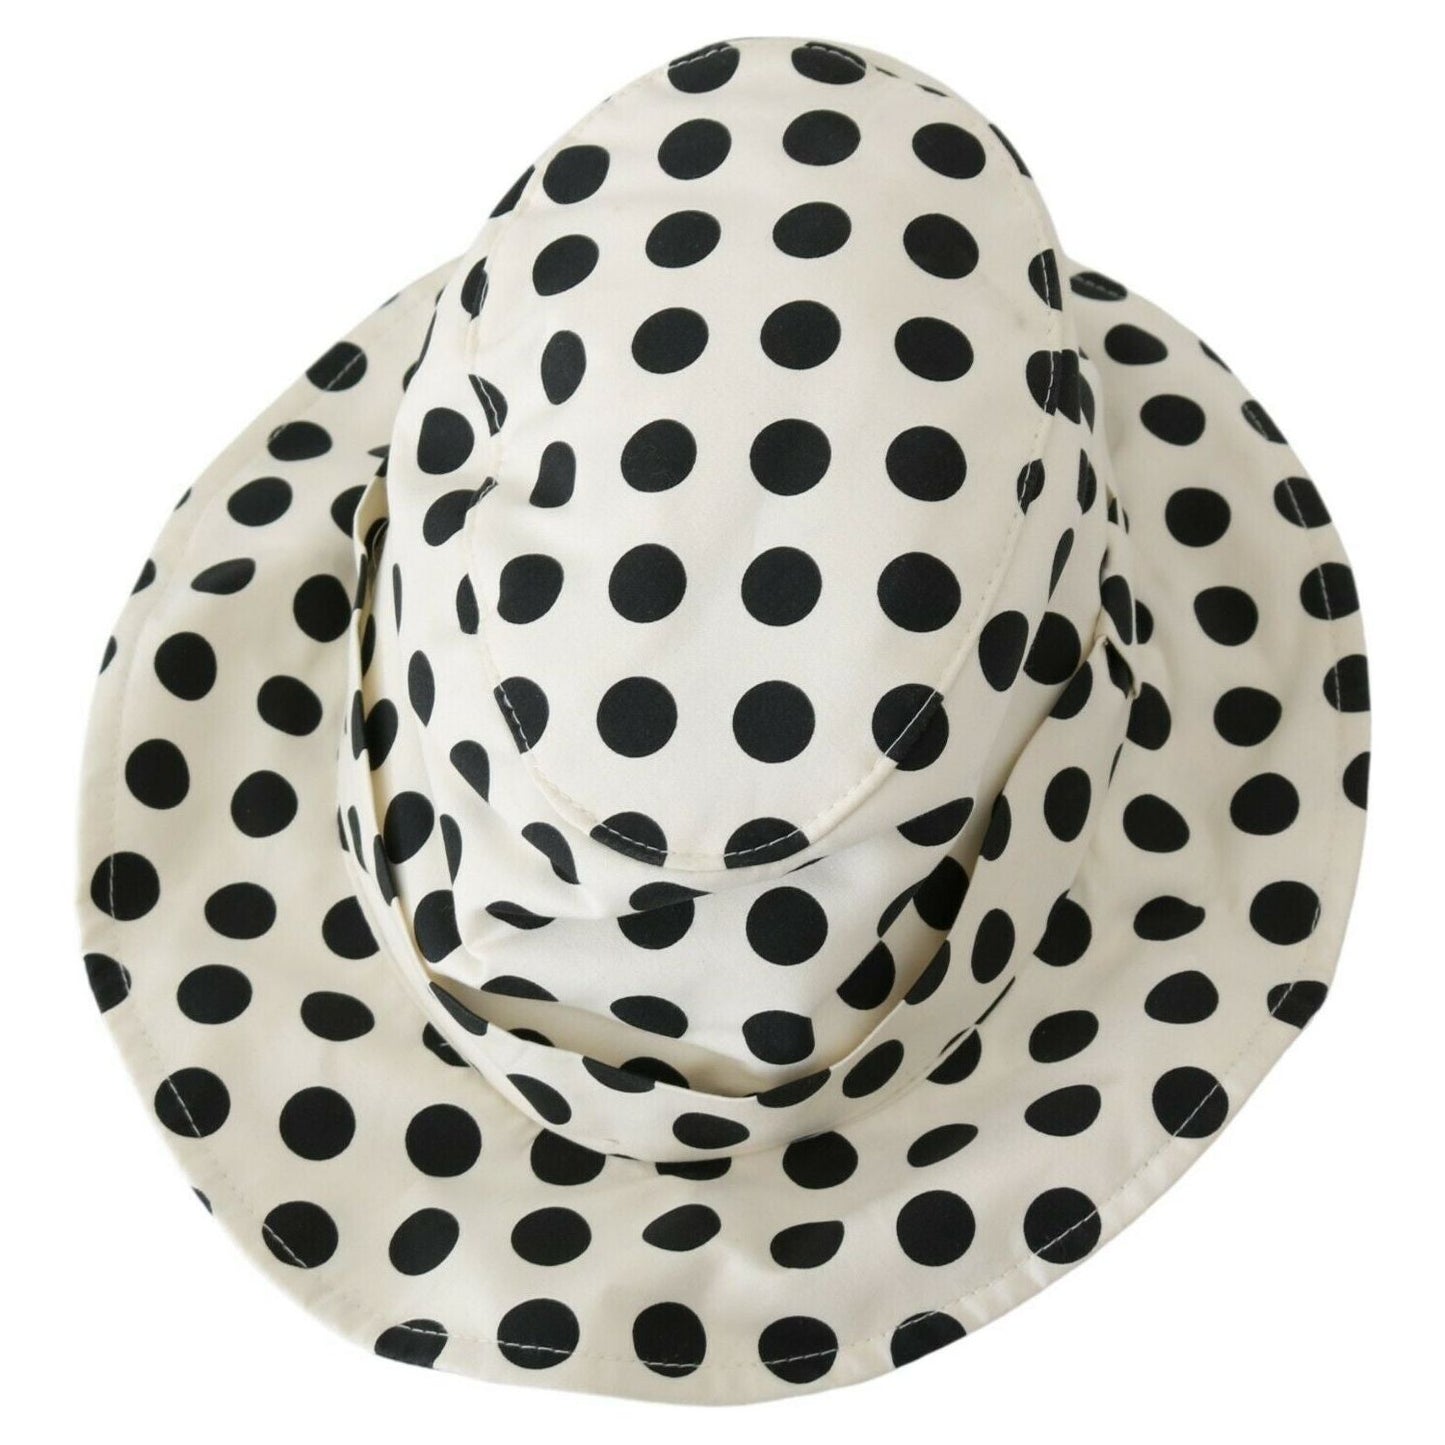 Dolce & Gabbana Chic Black Polka Dot Trilby Hat white-100-cotton-polka-dot-design-trilby-hat